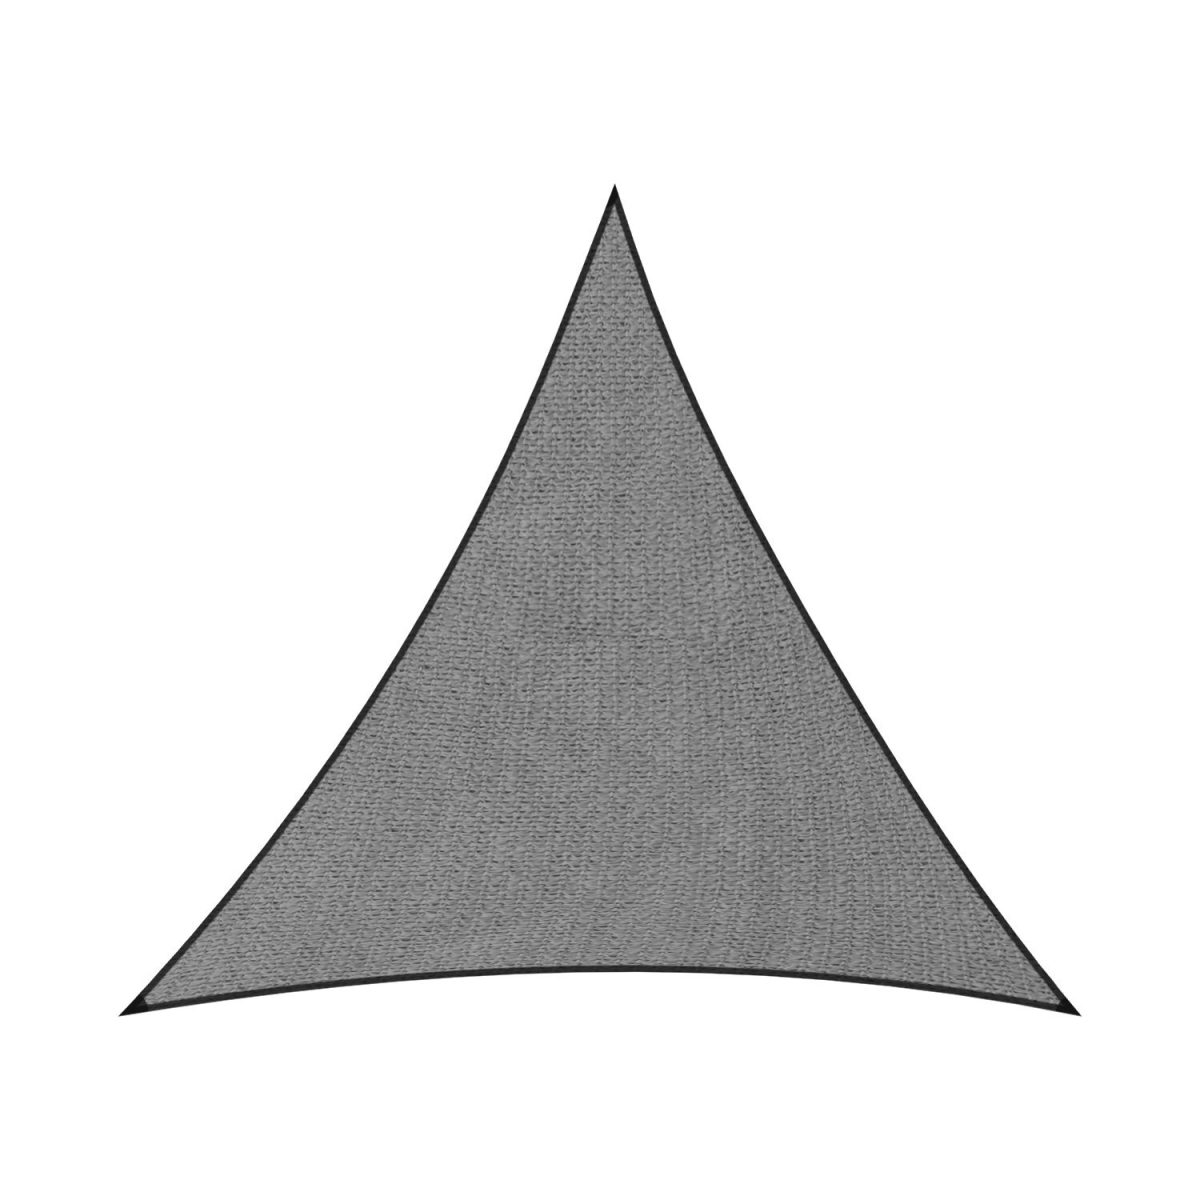 Wallaroo Triangle Shade Sail 3.6 x 3.6 x 3.6M – Grey